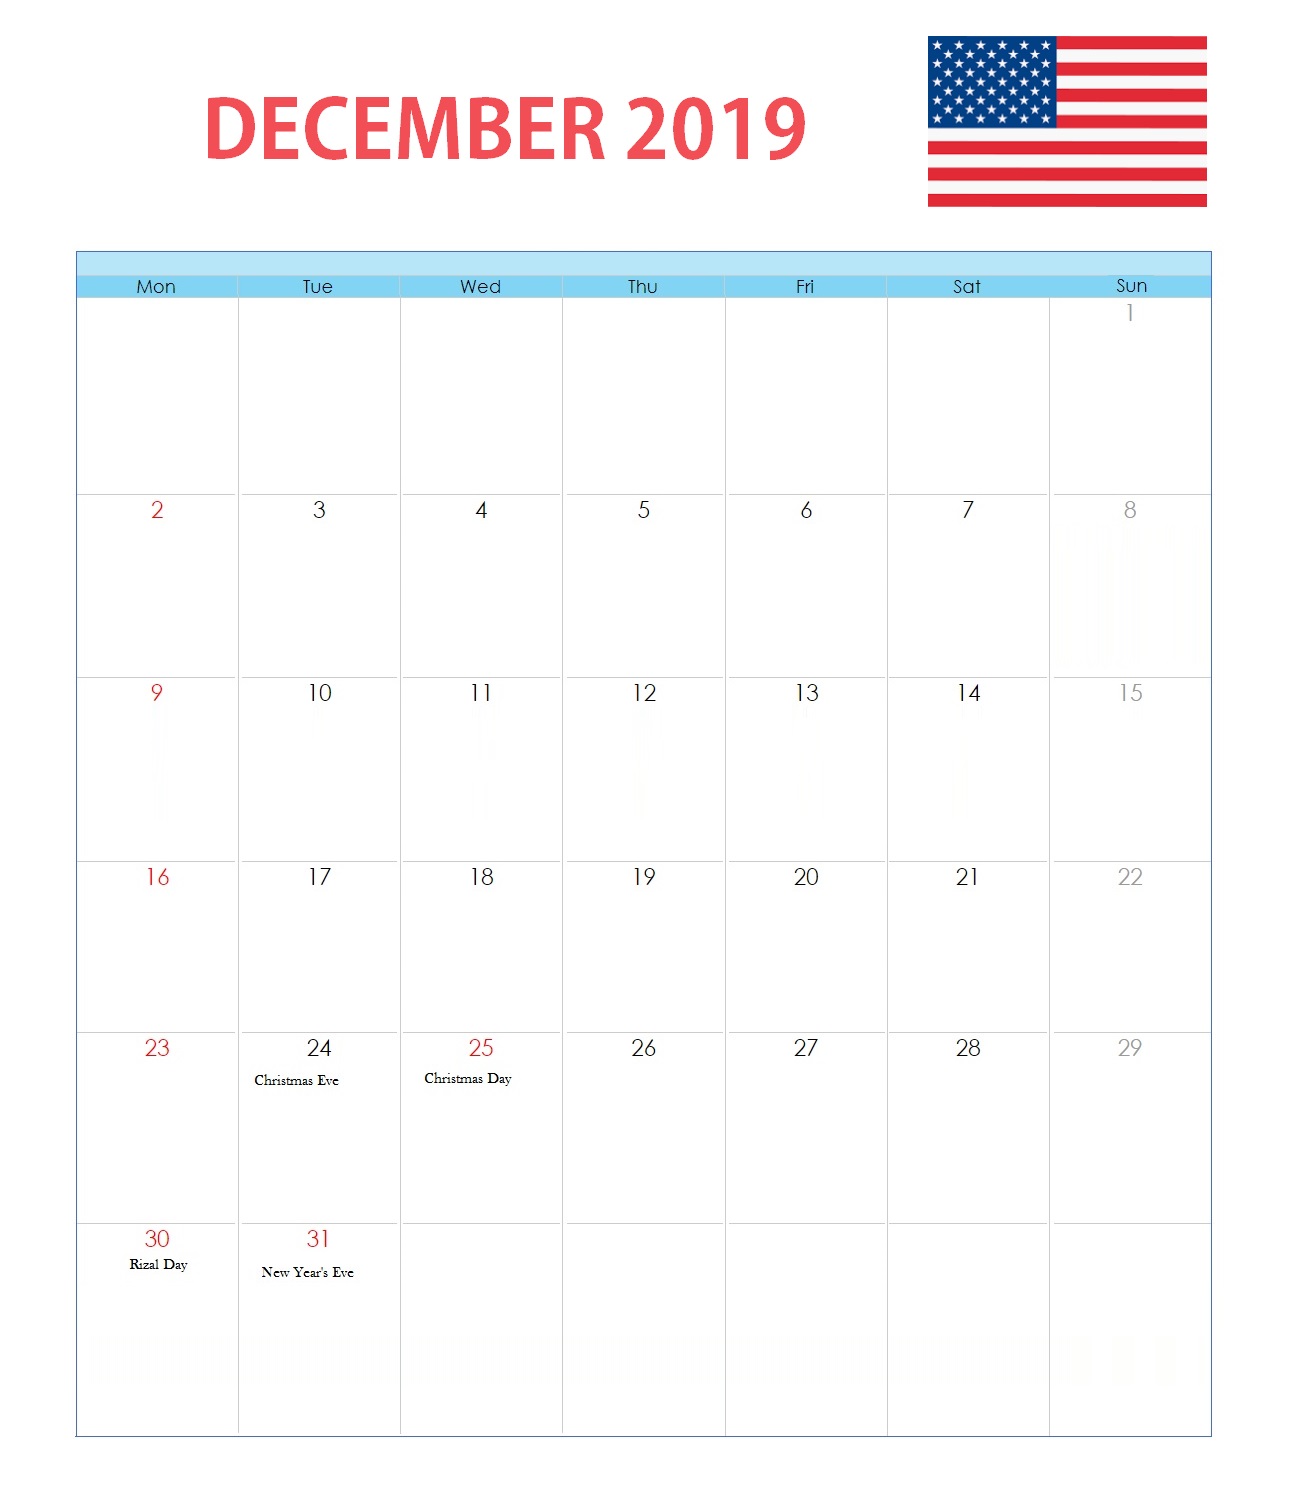 December 2019 United States Holidays Calendar